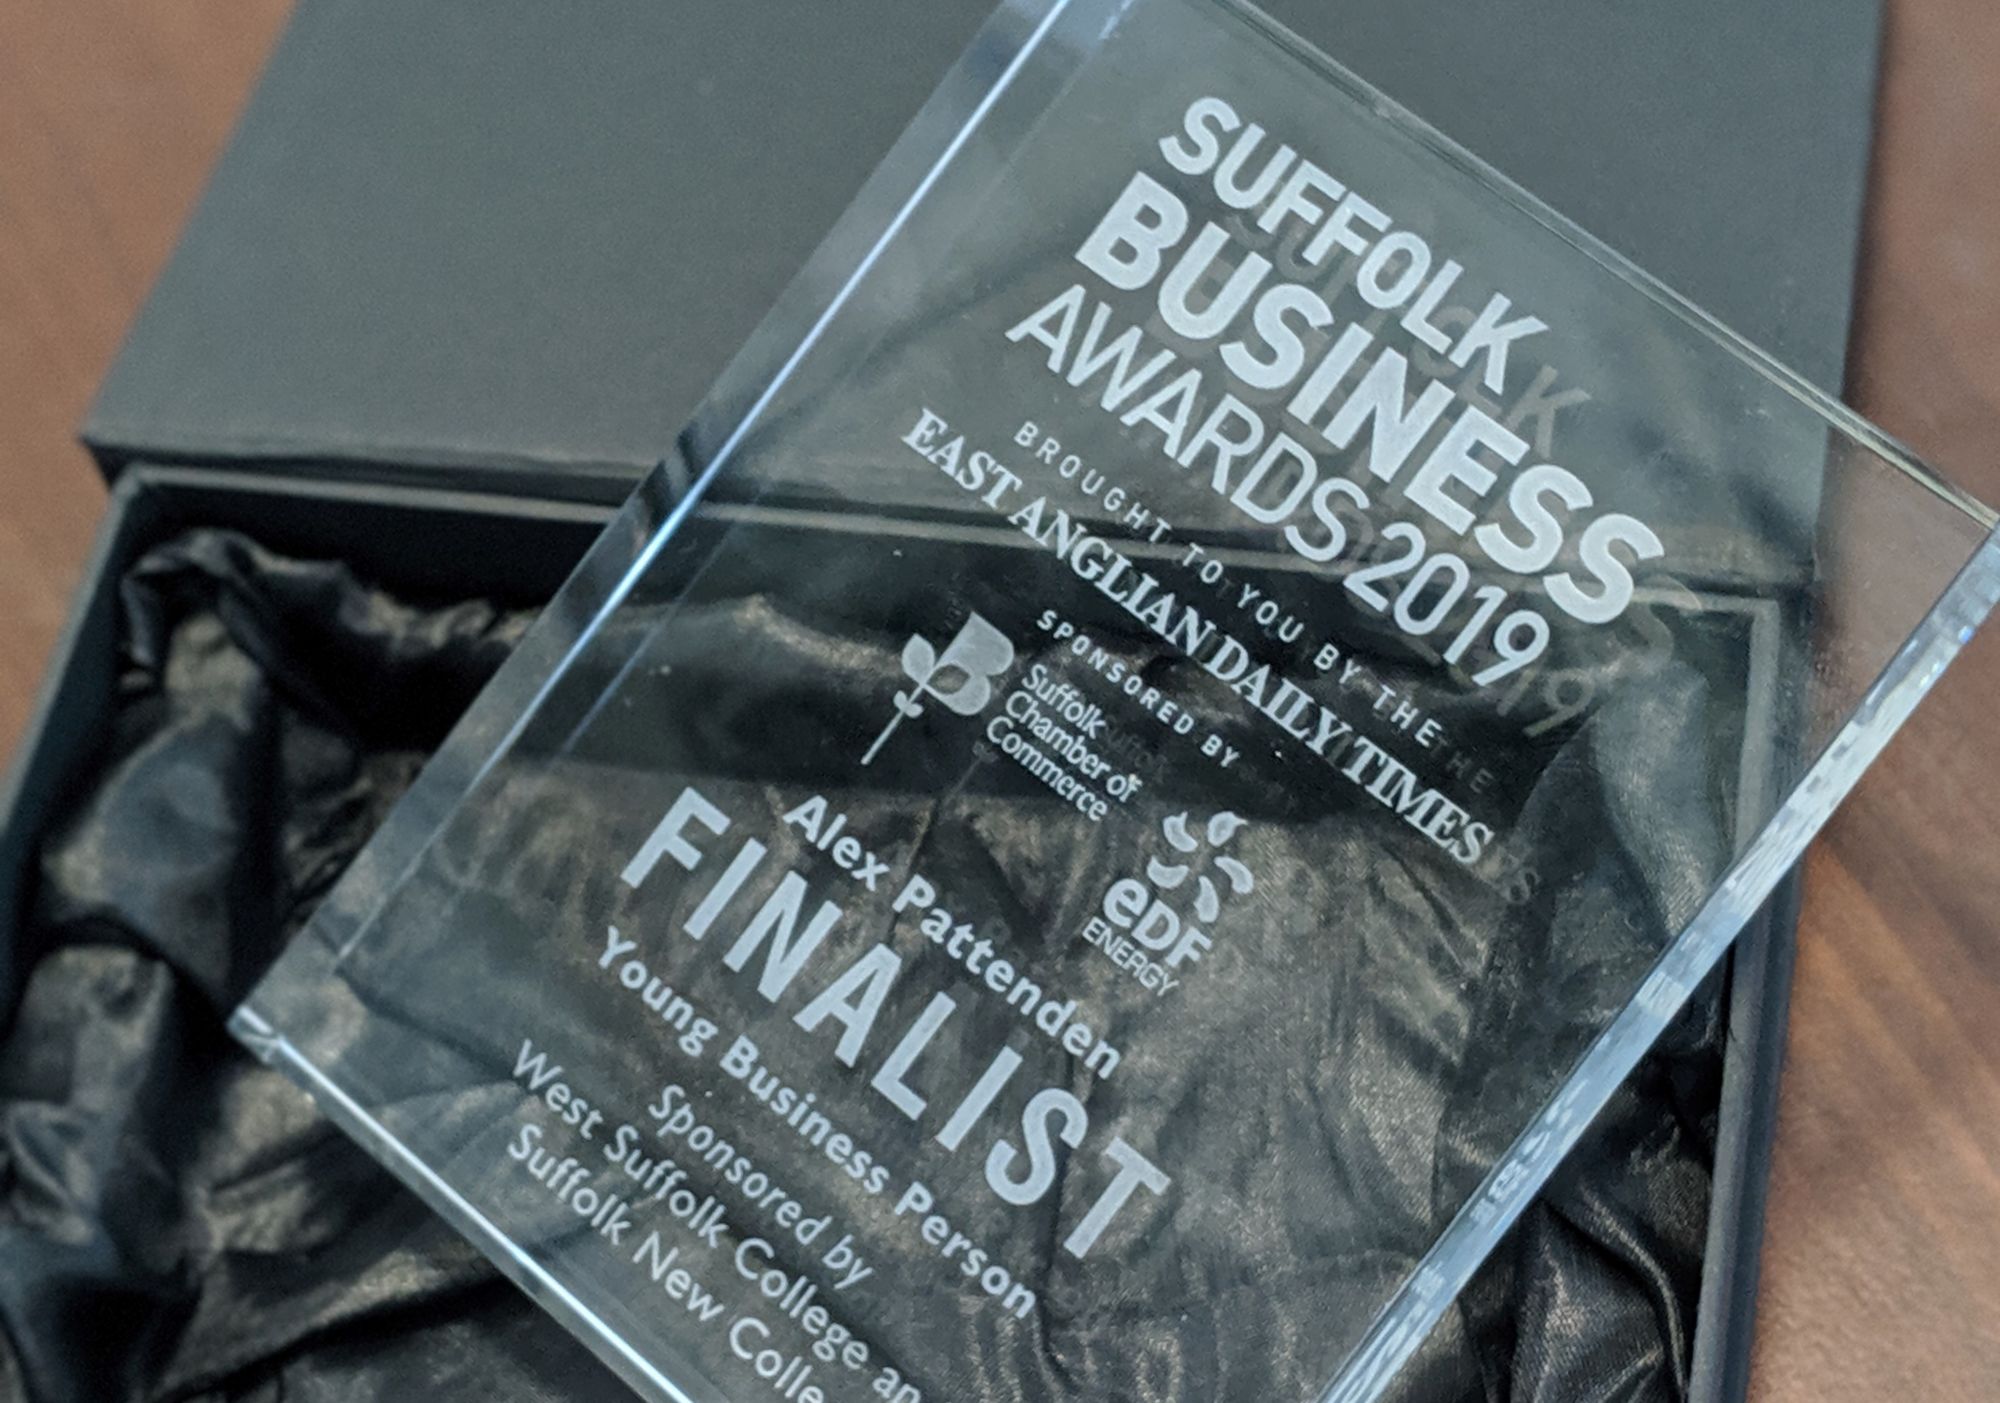 suffolk business awards 2019